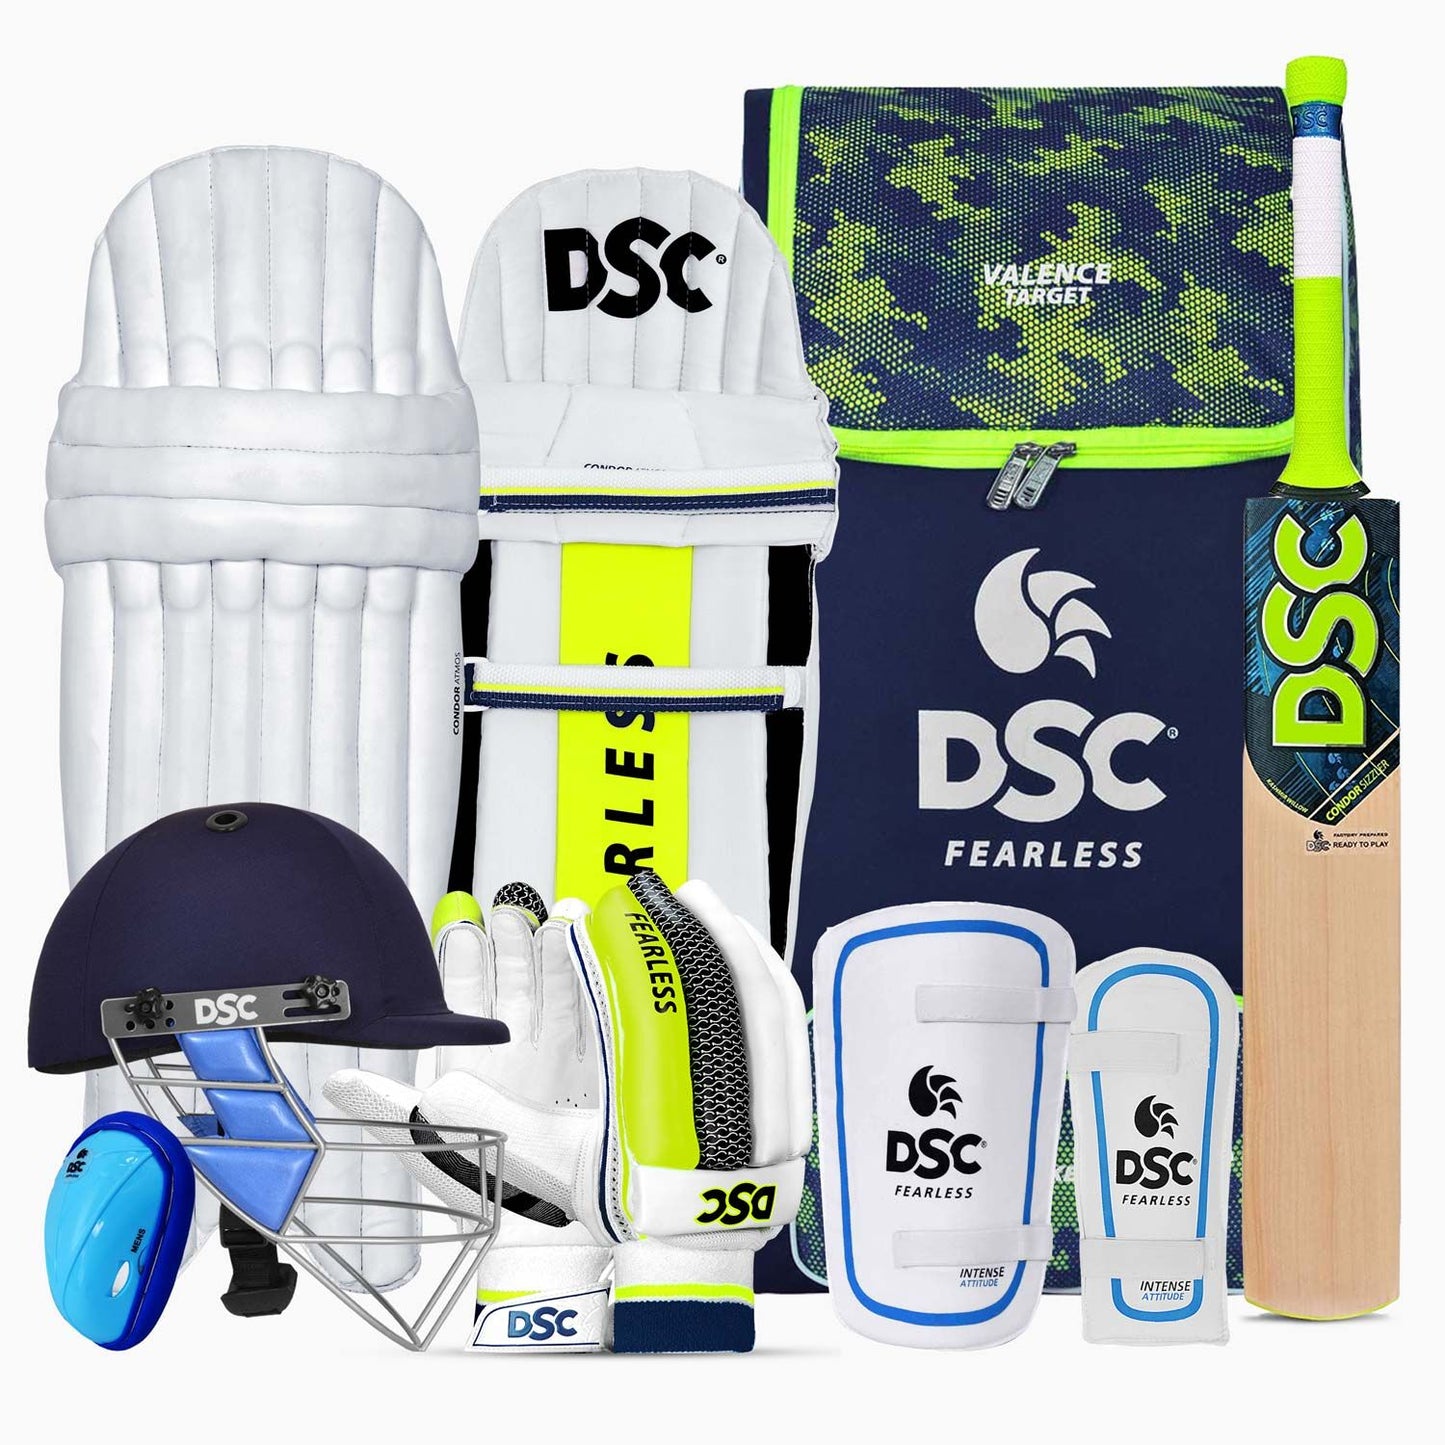 DSC Premium Kashmir Willow Cricket Kit